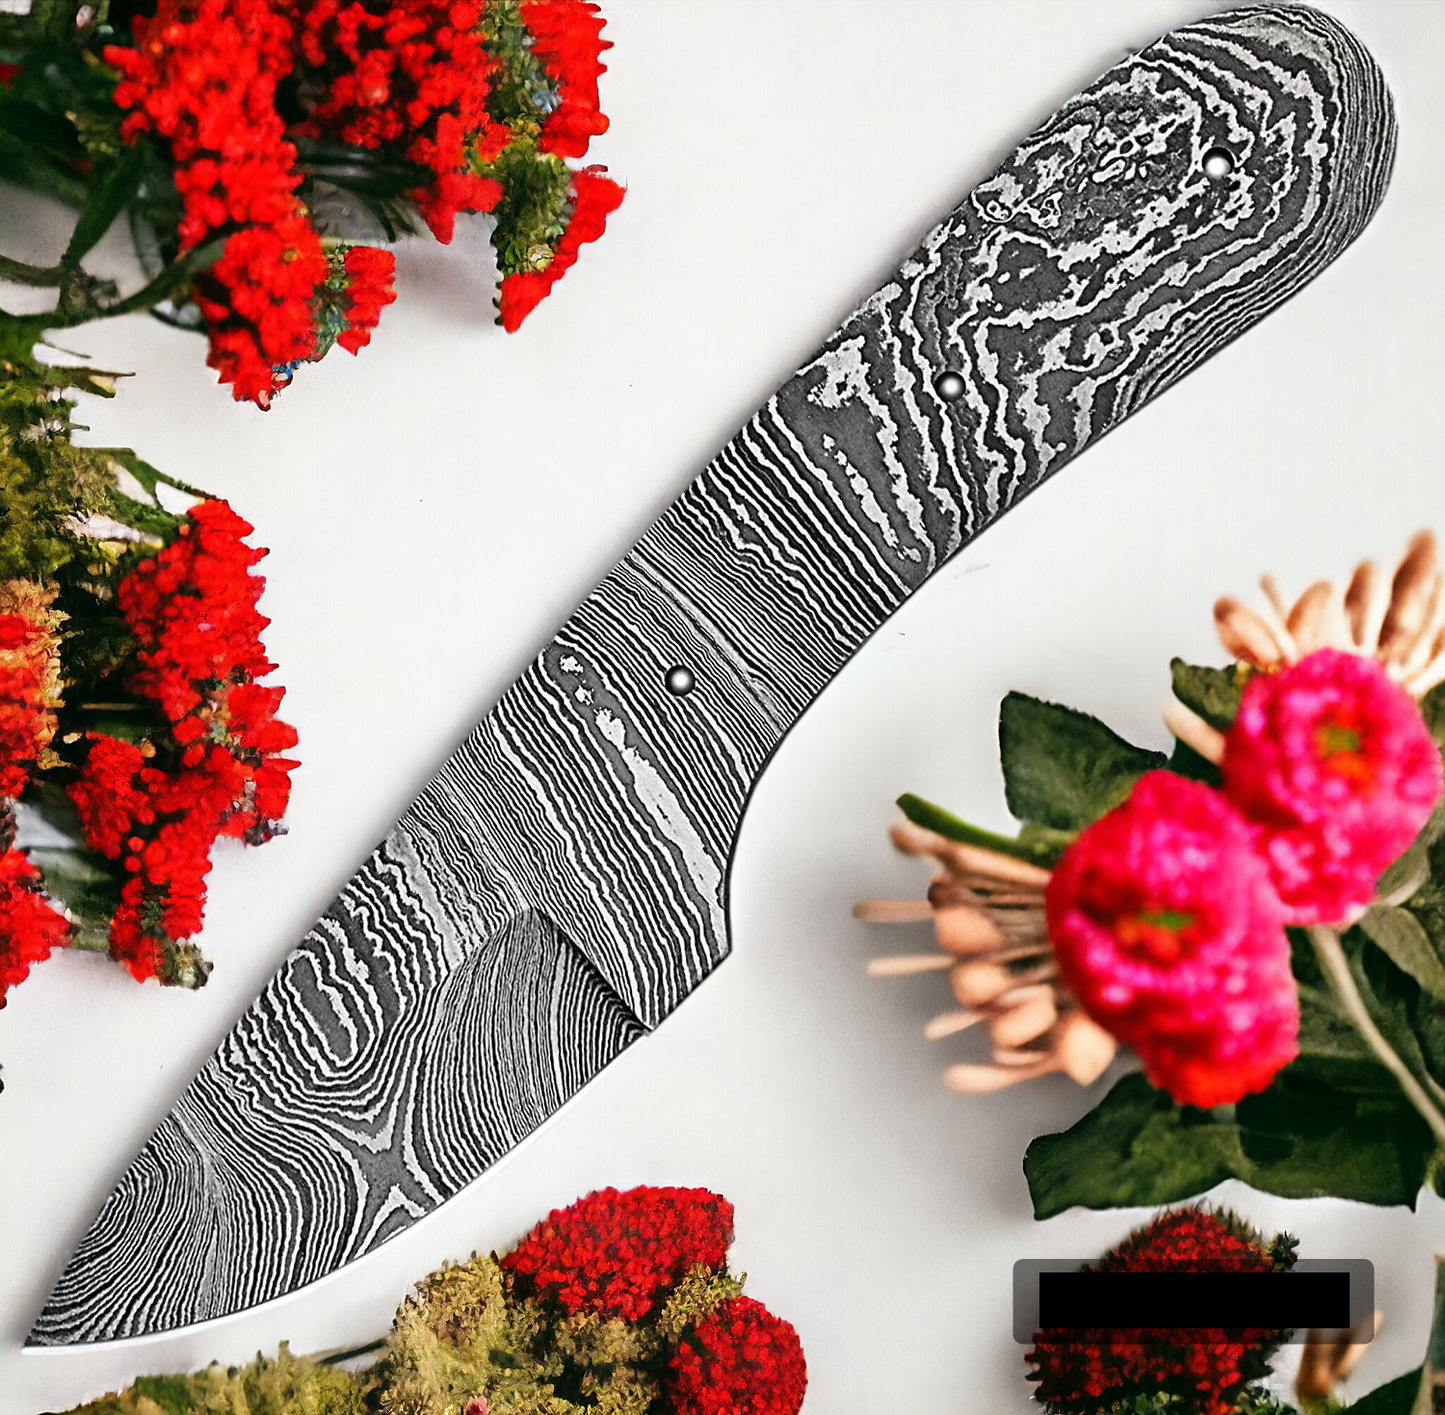 Custom Handmade Damascus Steel Full Tang Blank Blade Knife for Knife Making Supplies-Y12